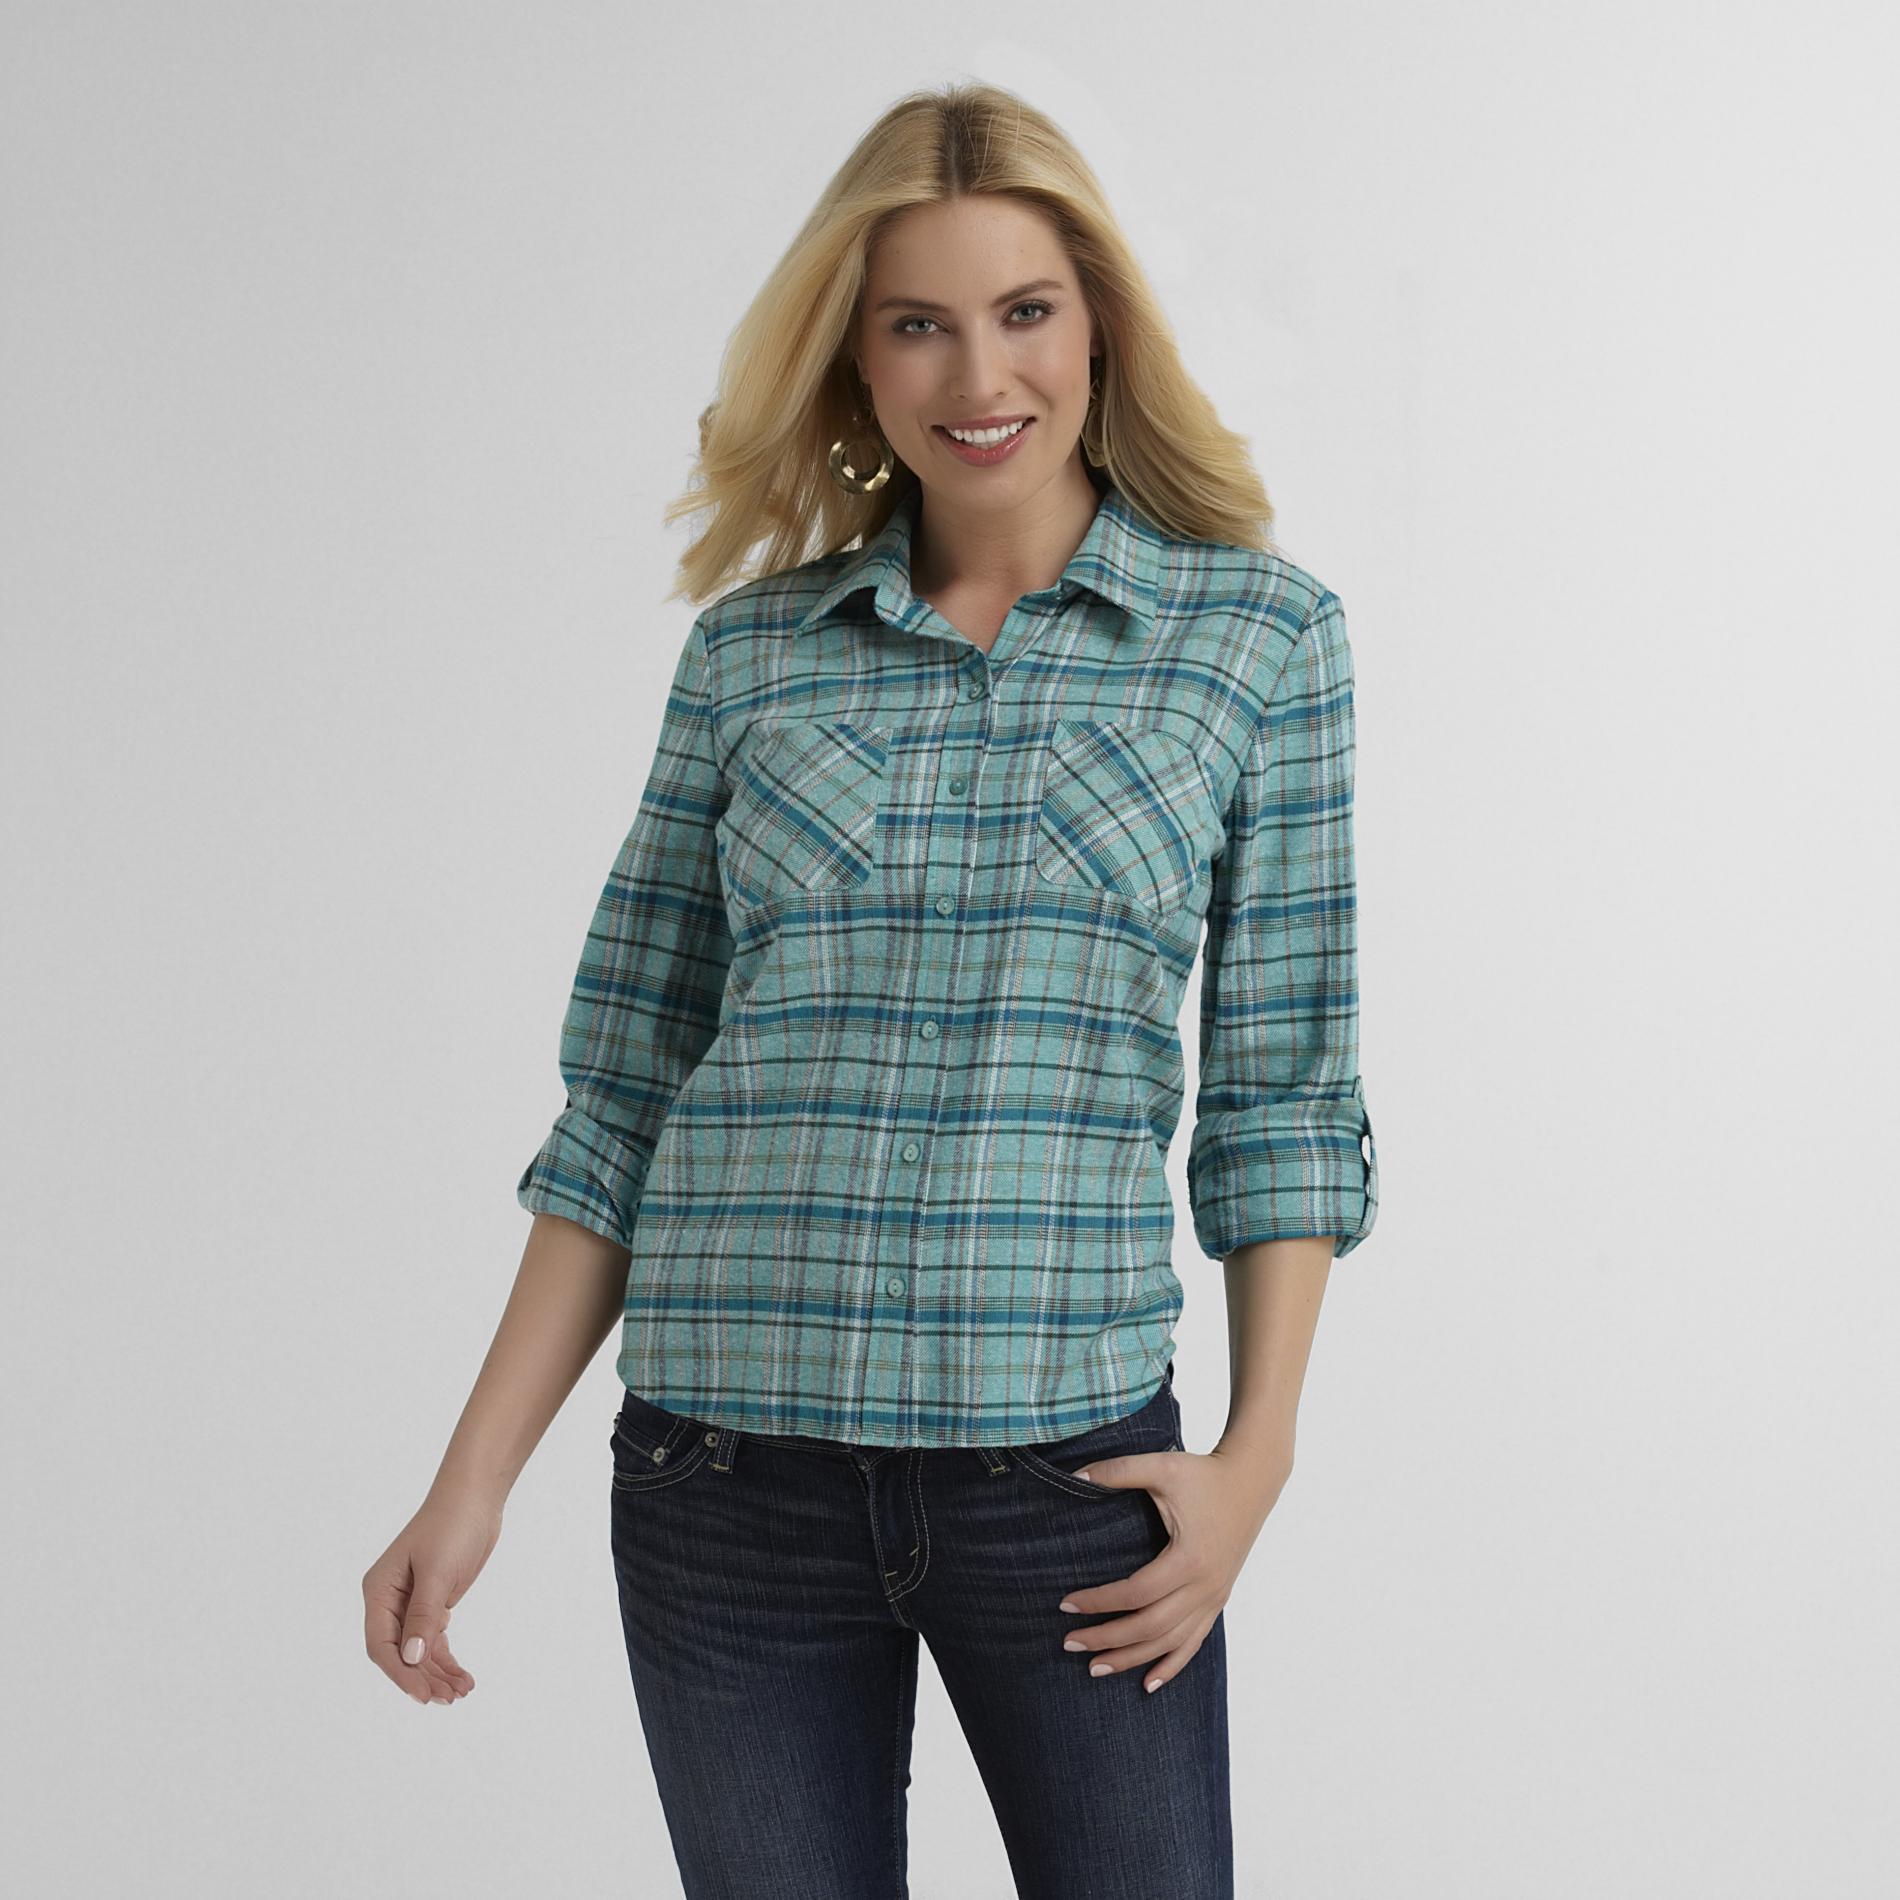 Basic Editions Women's Flannel Shirt - Plaid